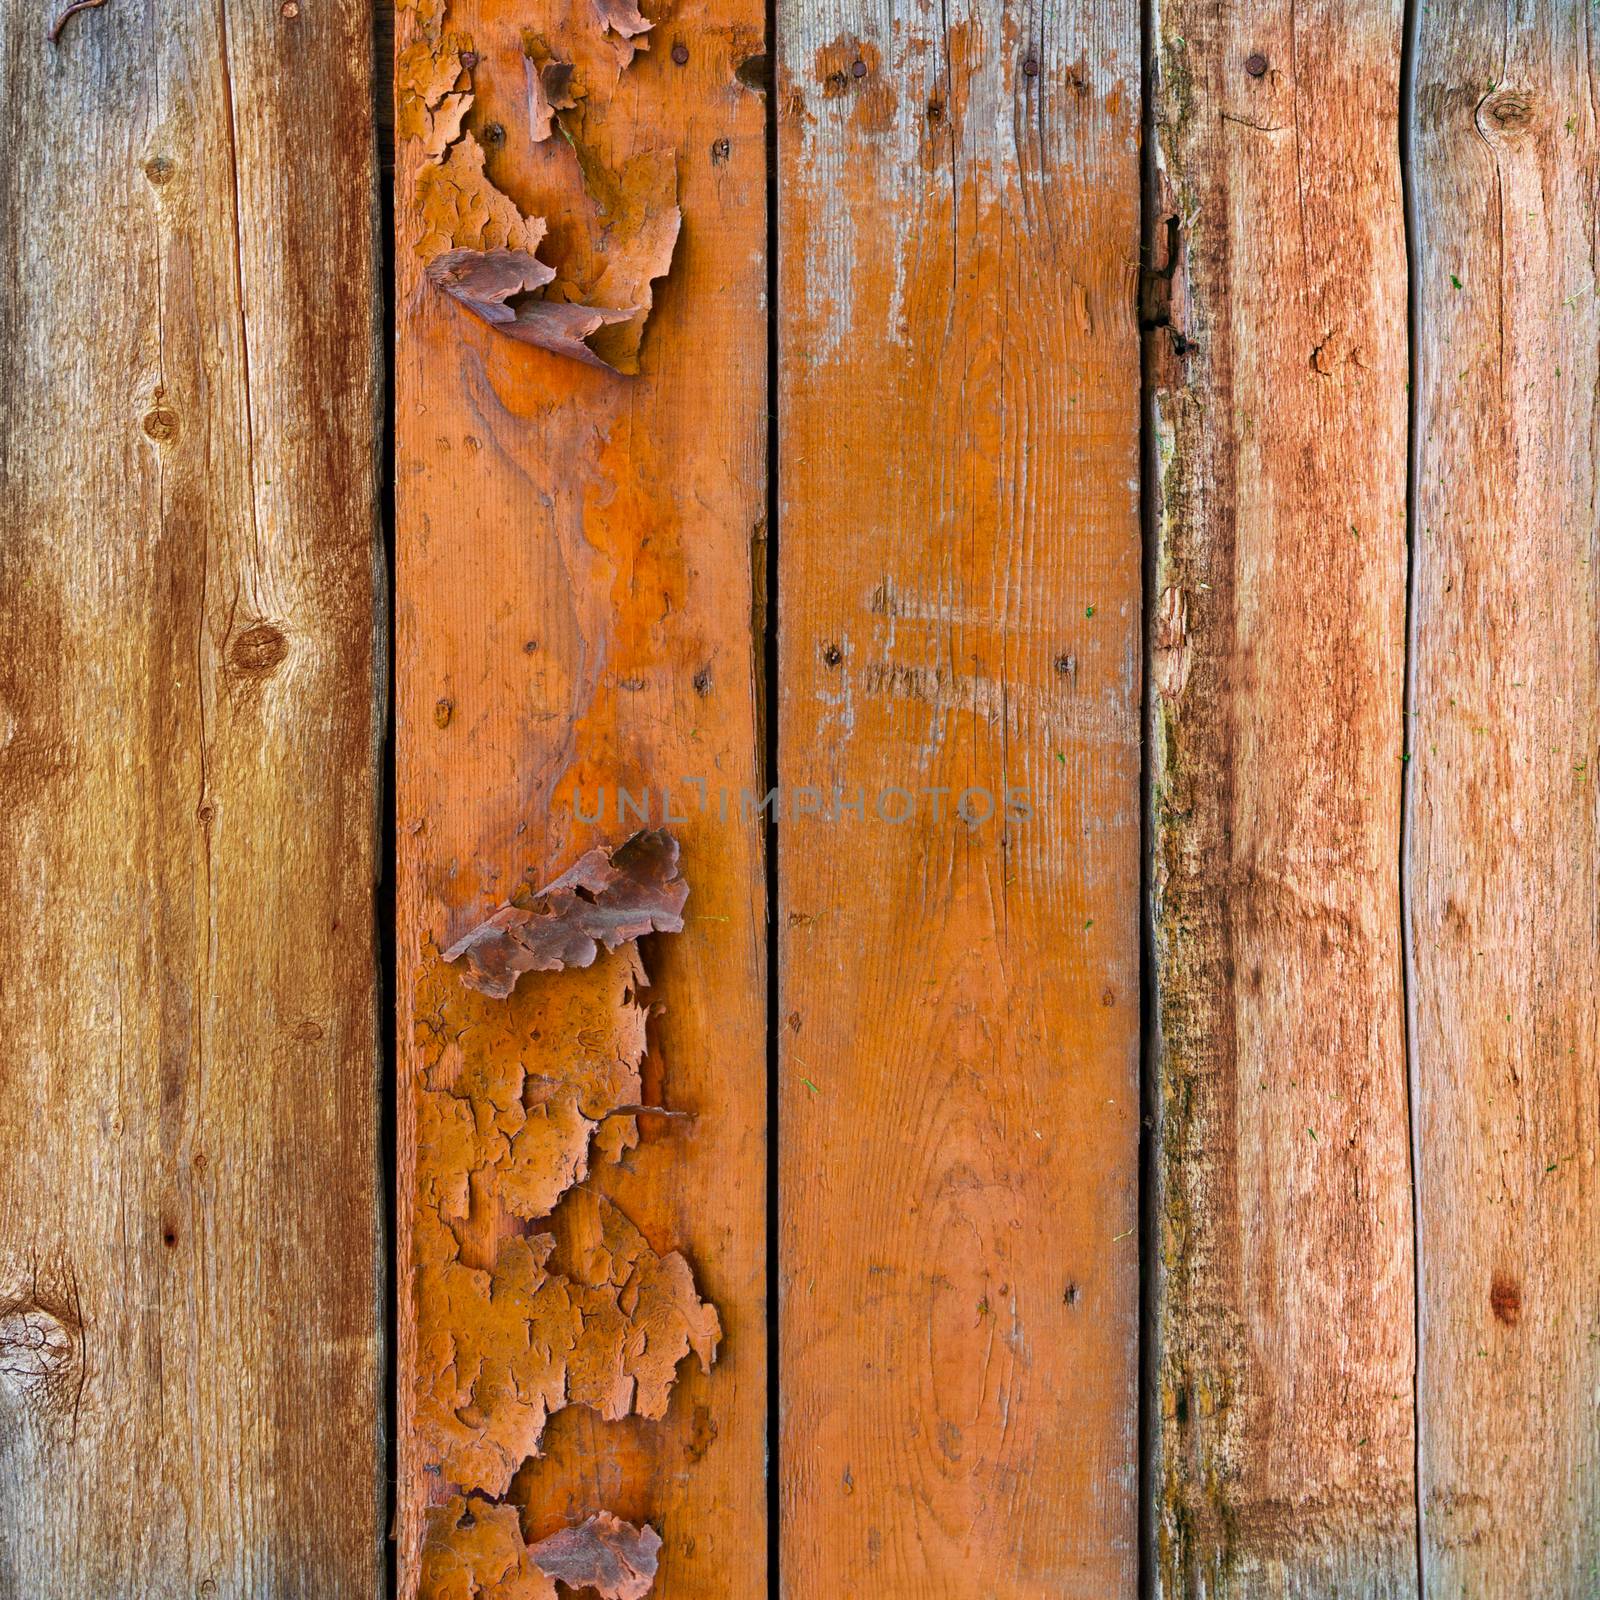 Wood panel wall texture grunge by SlayCer